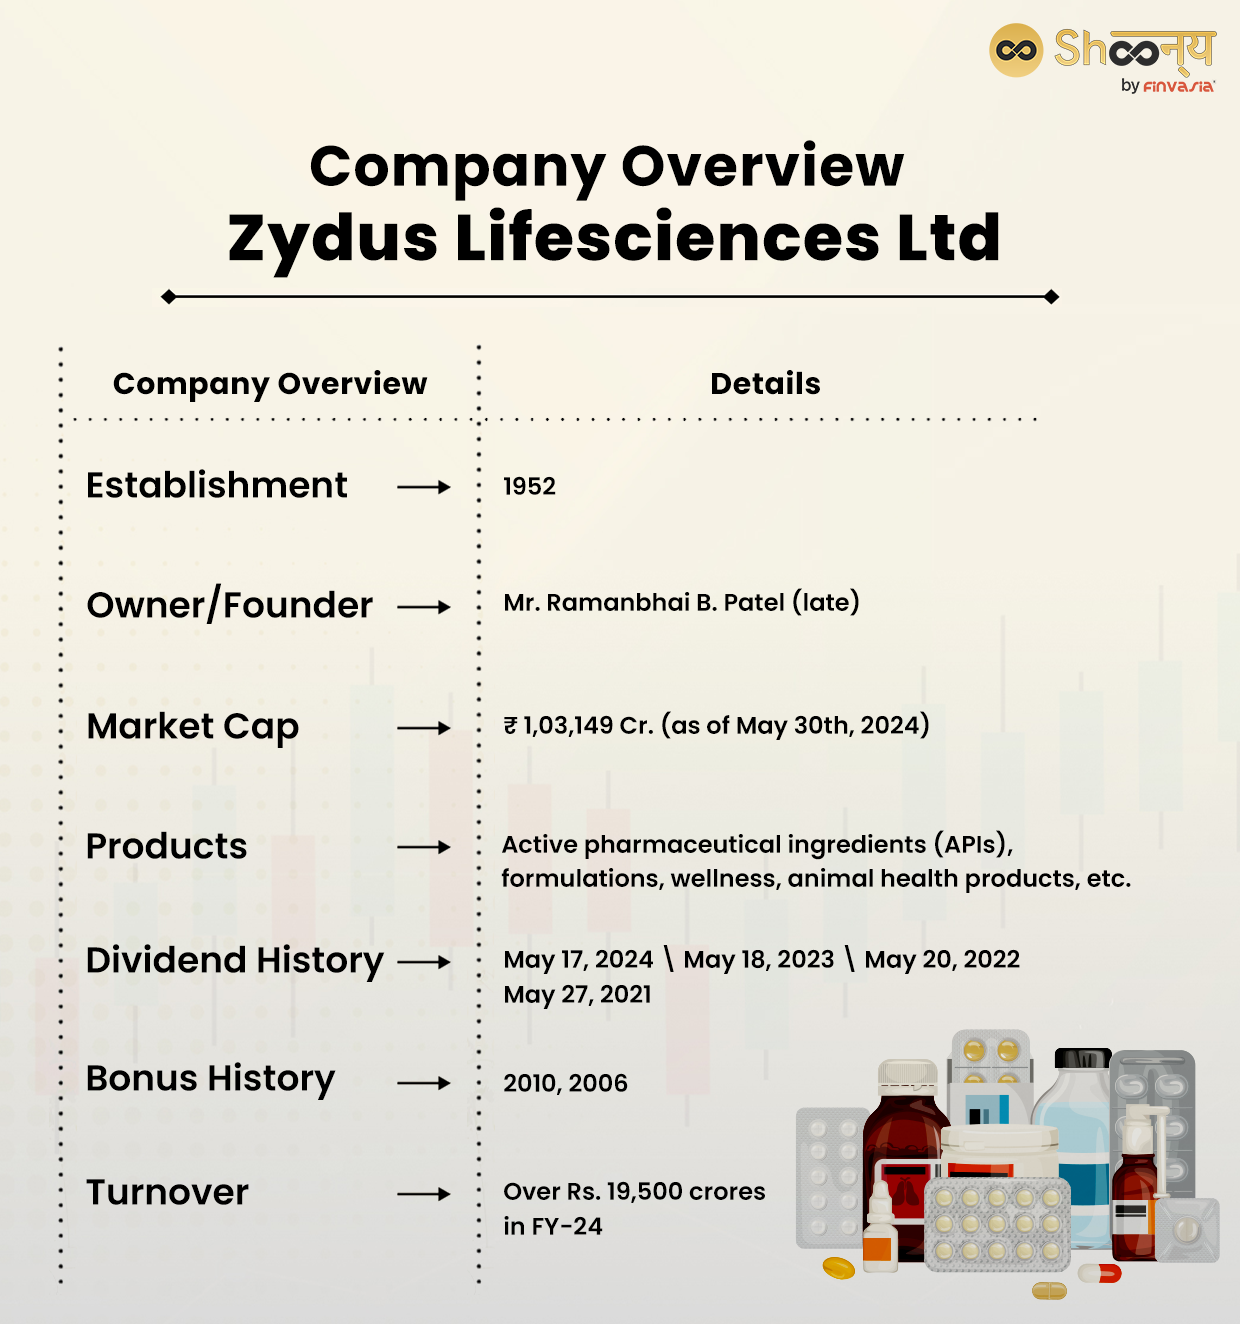 Zydus Lifesciences Ltd| Key Details and Financials